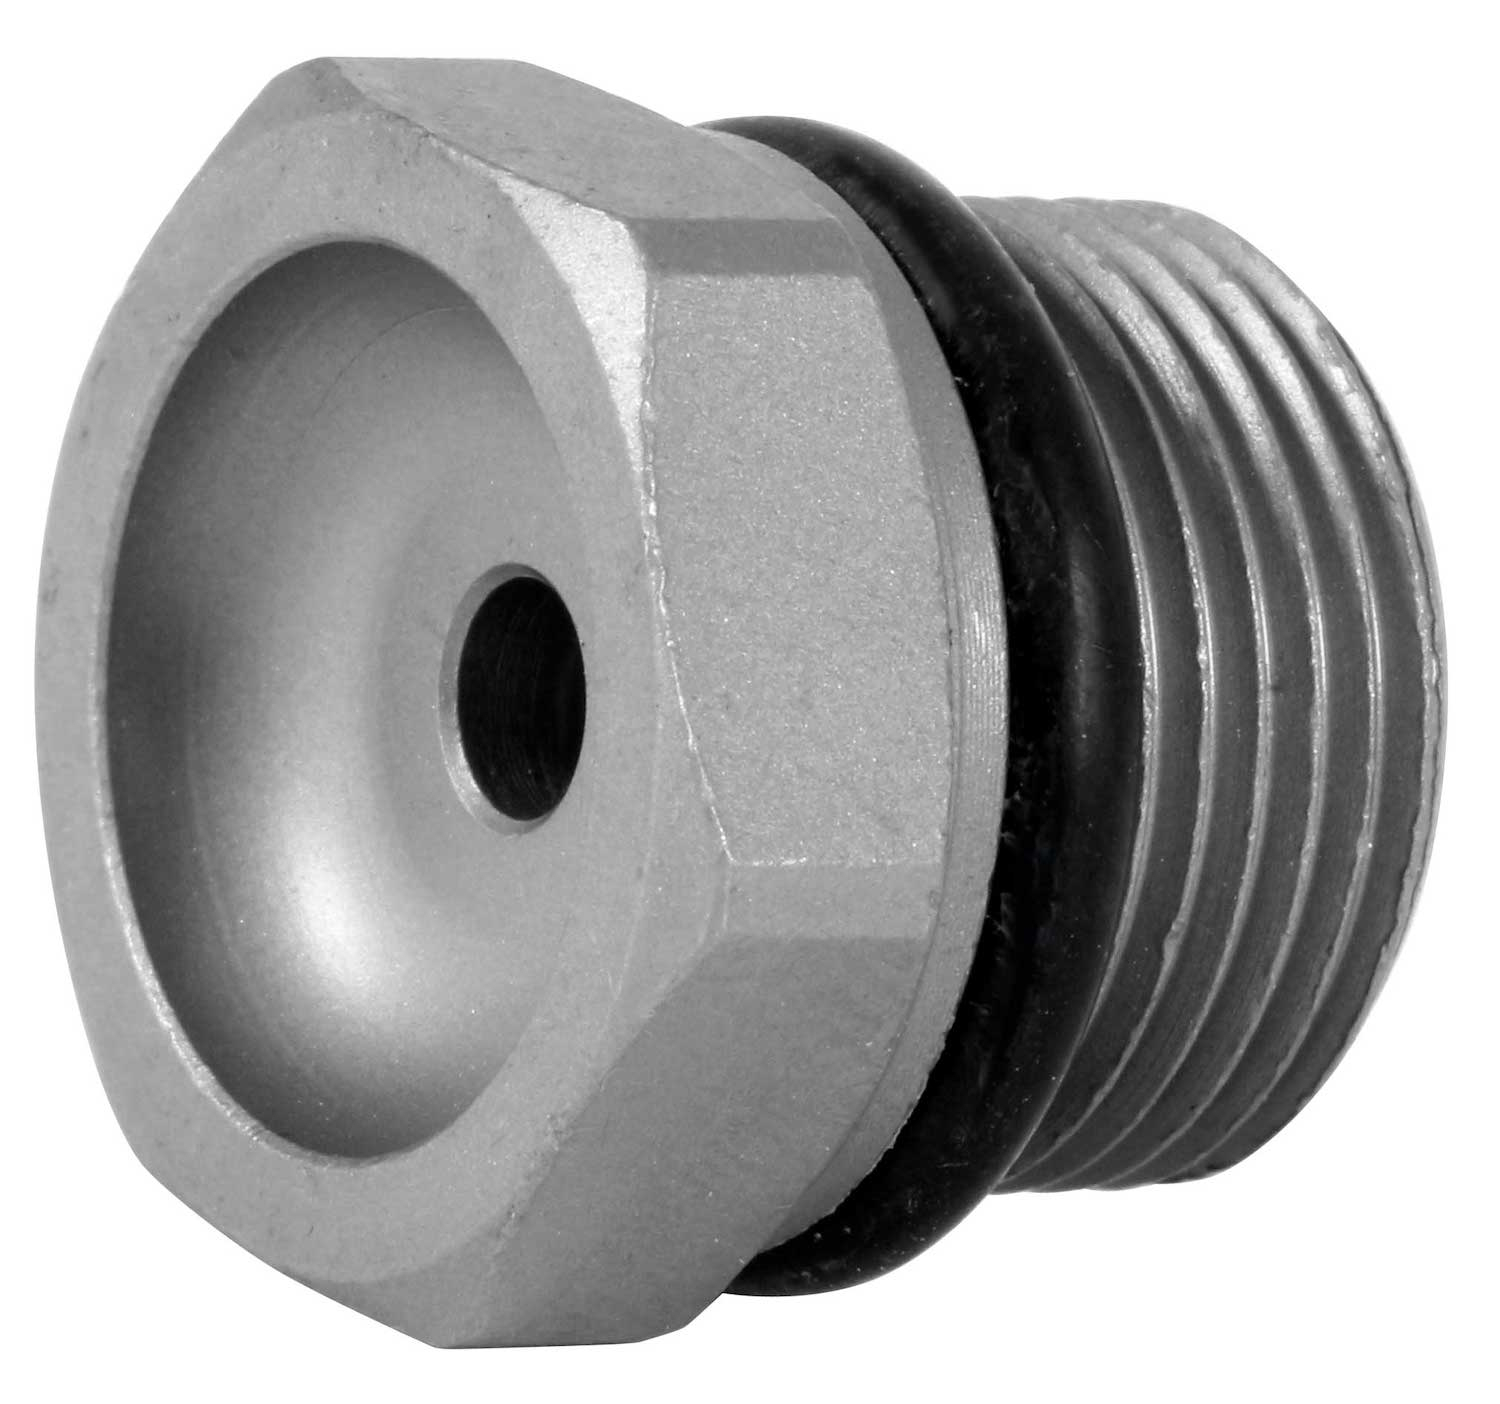 Buse inox pour lance hydro-balayage - calibre 2,0 mm